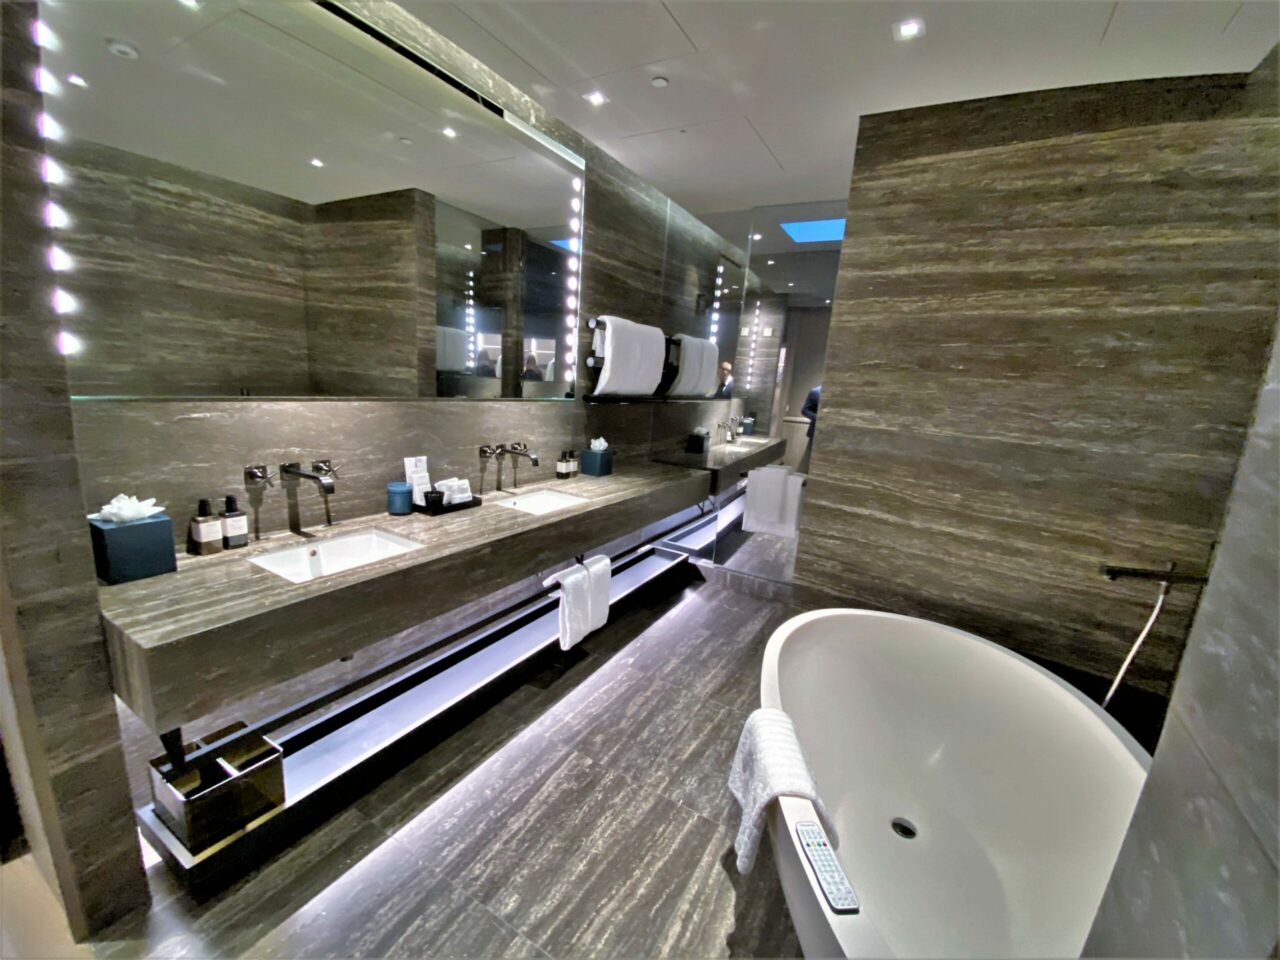 The Londoner hotel luxurious bathroom 